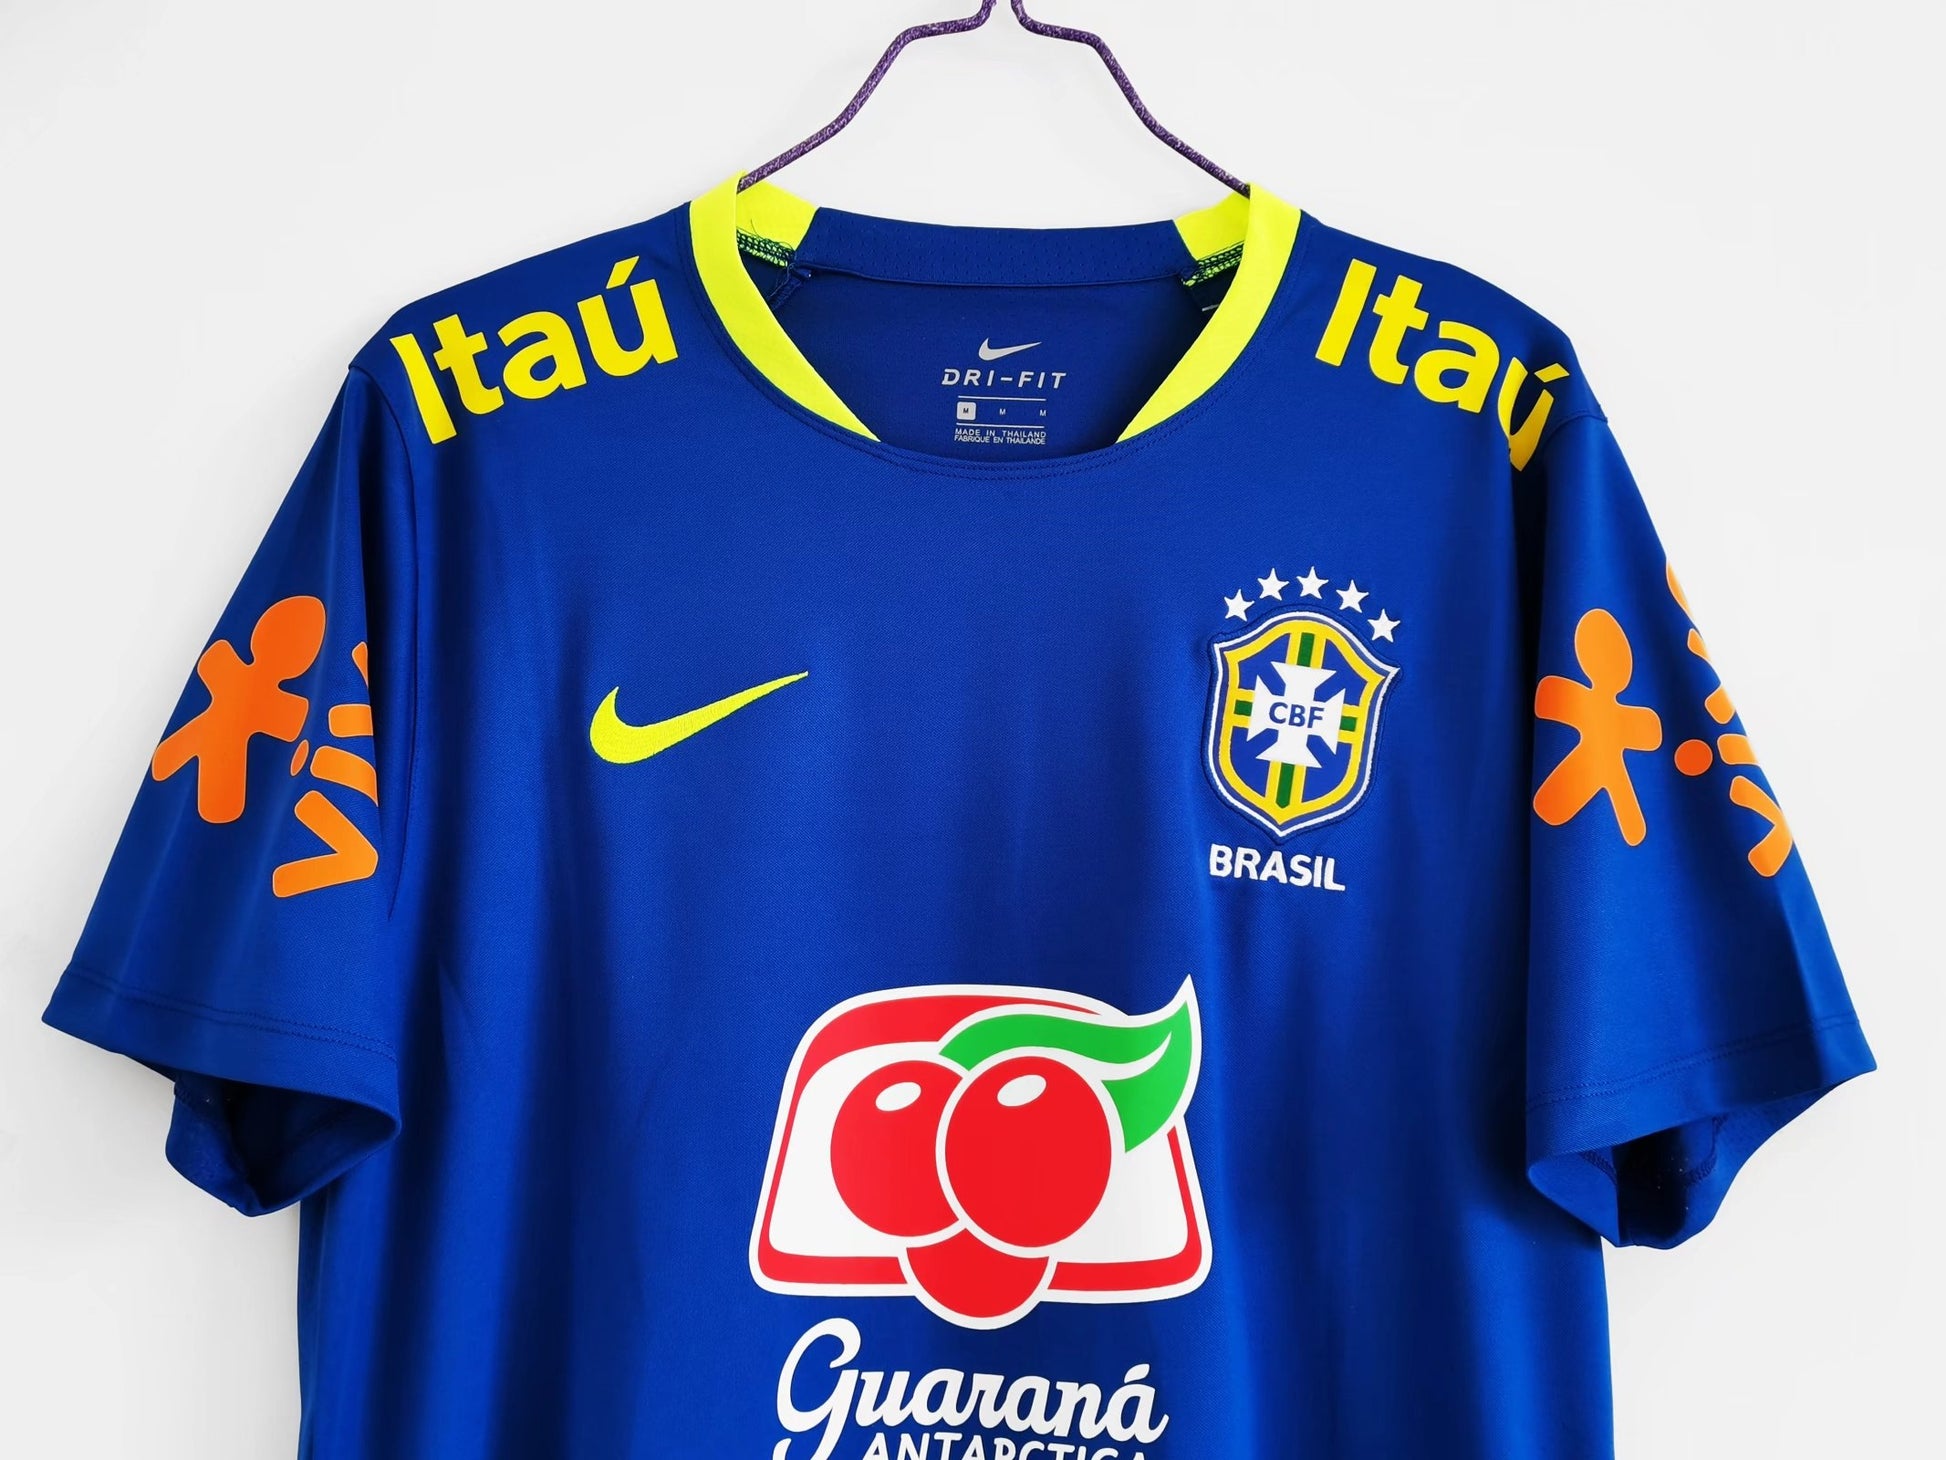 Brazil Training/Leisure football shirt (unknown year).